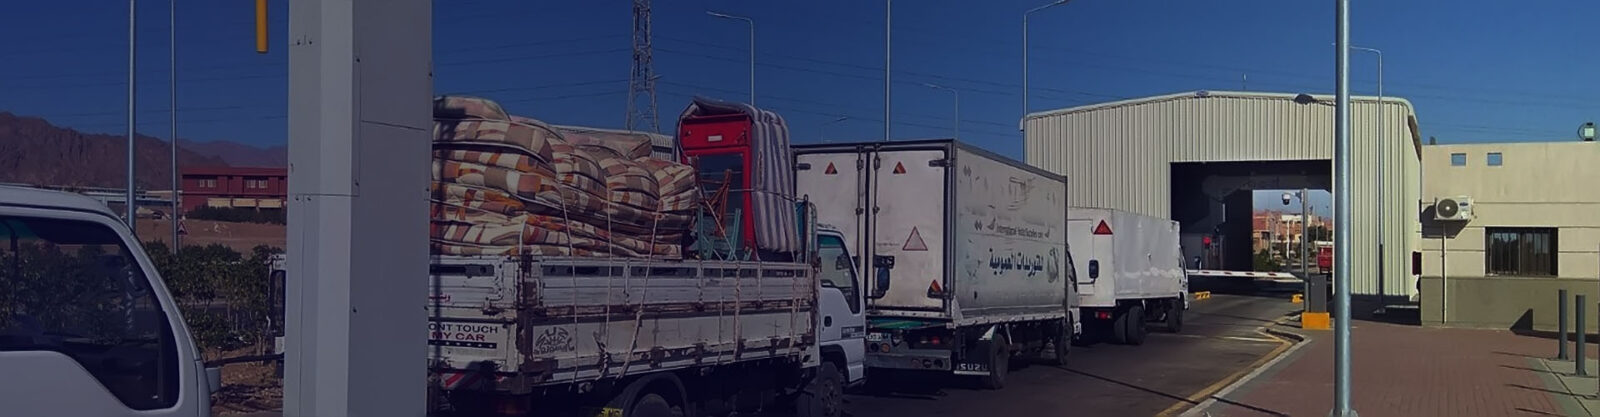 LV Shipping & Transport becomes LV Logistics - NOF